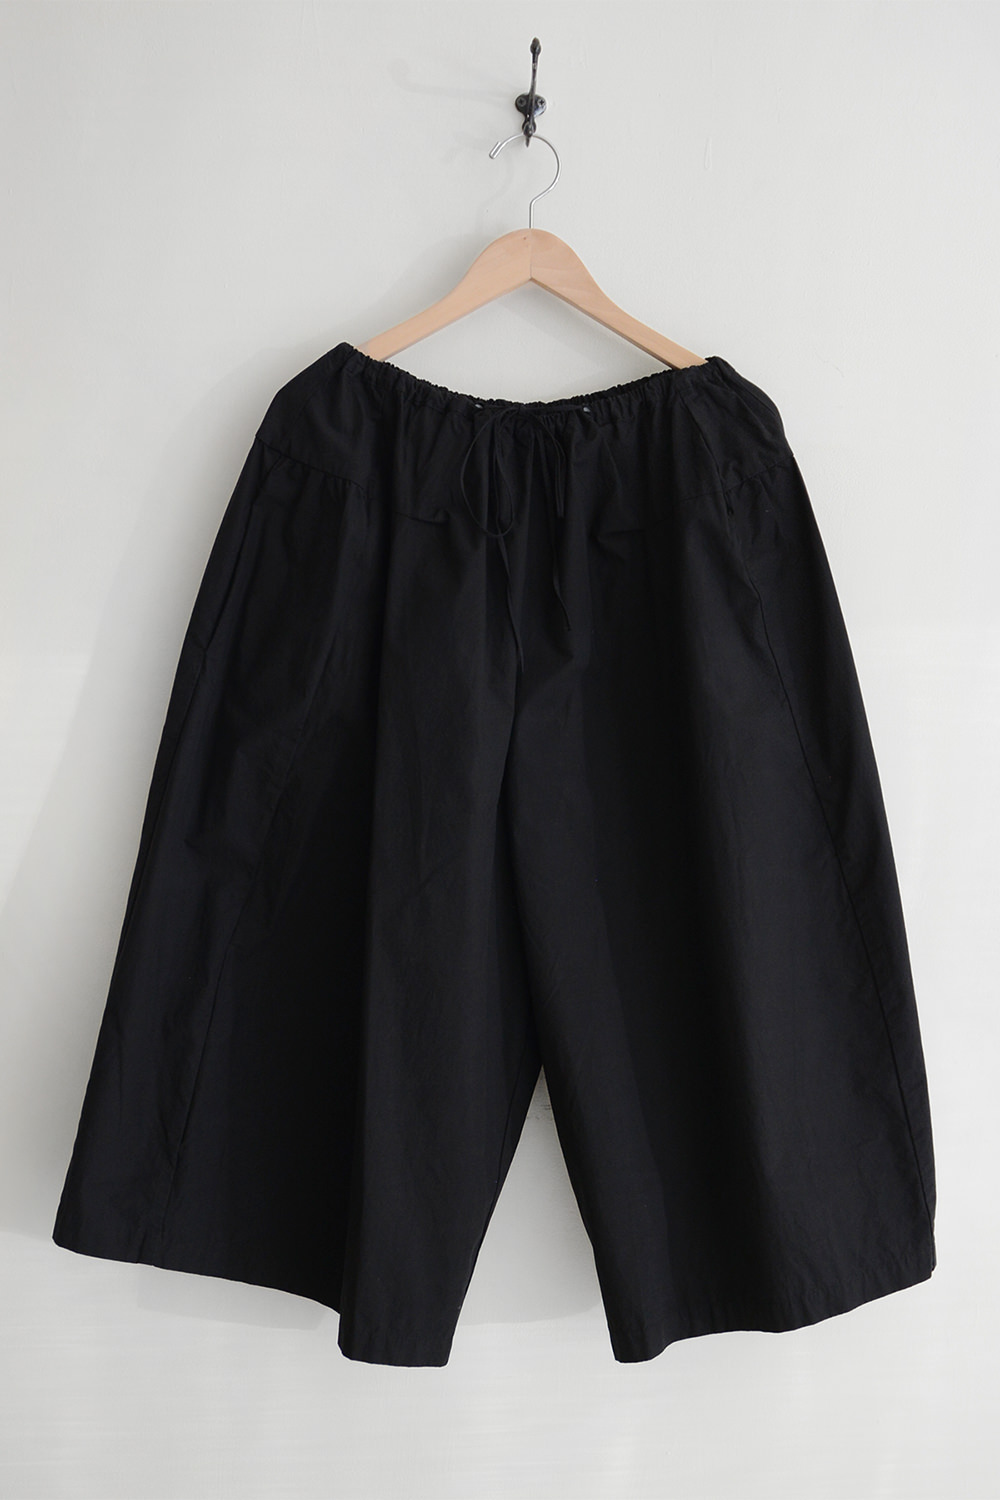 Manuelle Guibal 6454 Oversized Pants Black Top Picture